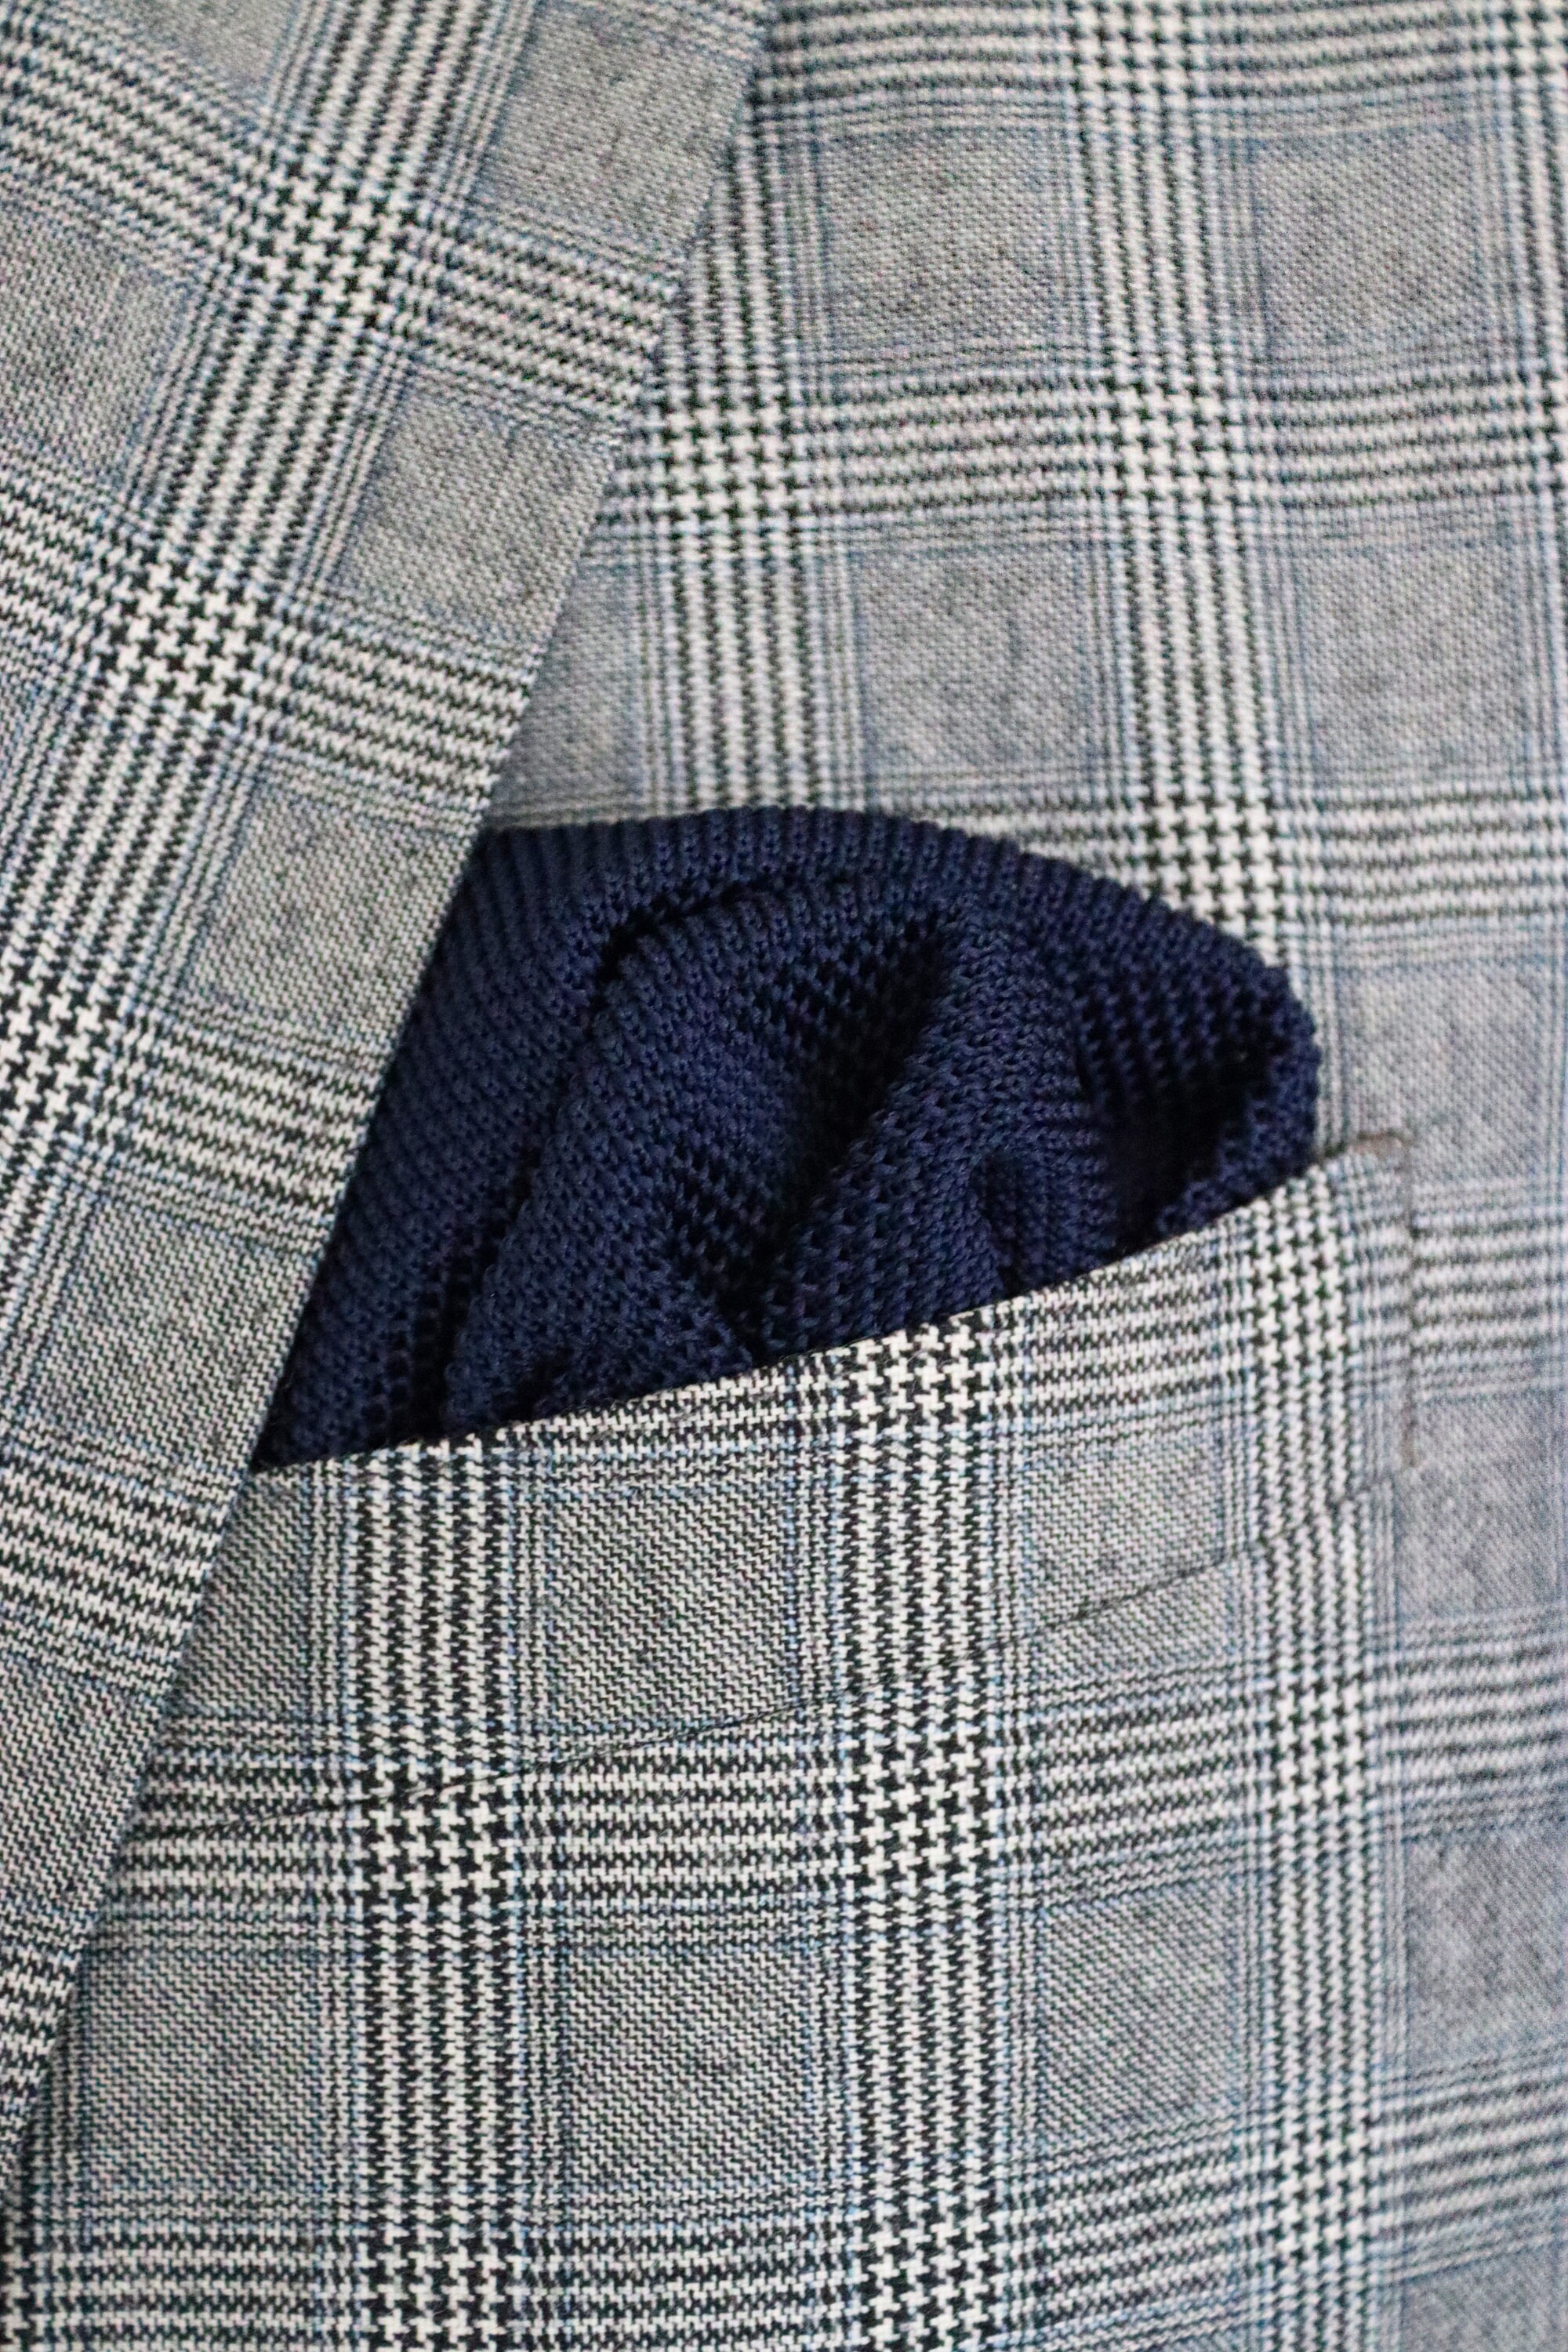 Navy Blue Knitted Tie Business Tie Knit Tie Wedding Tie - Etsy UK